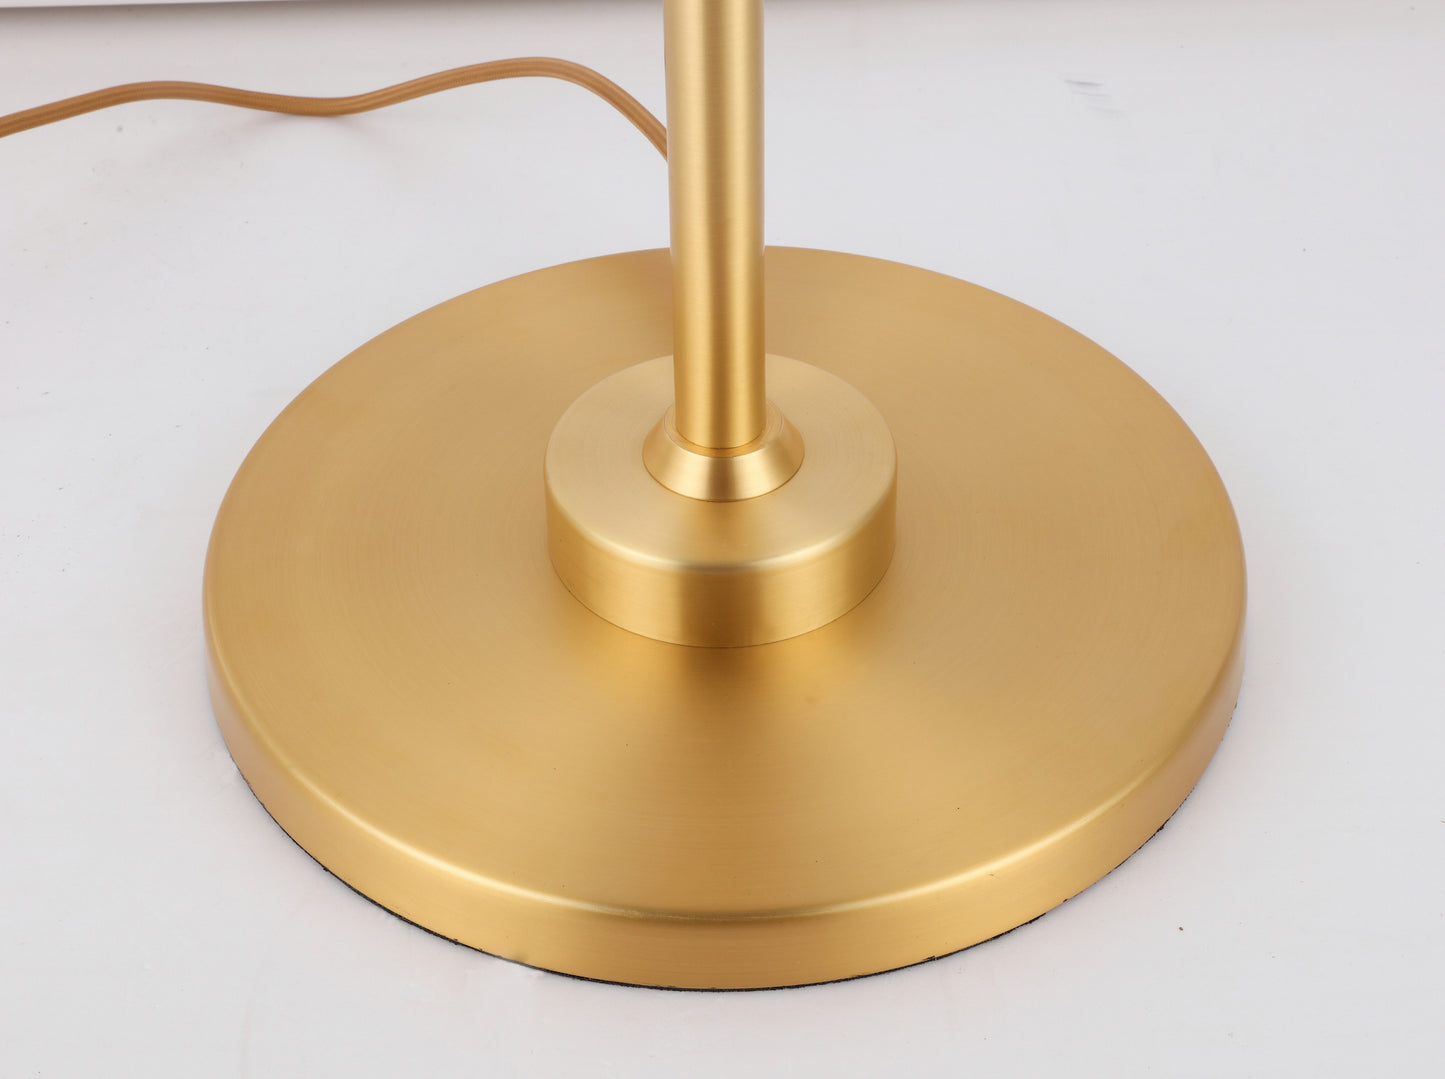 Jade Neck Gold Floor Lamp White Shade